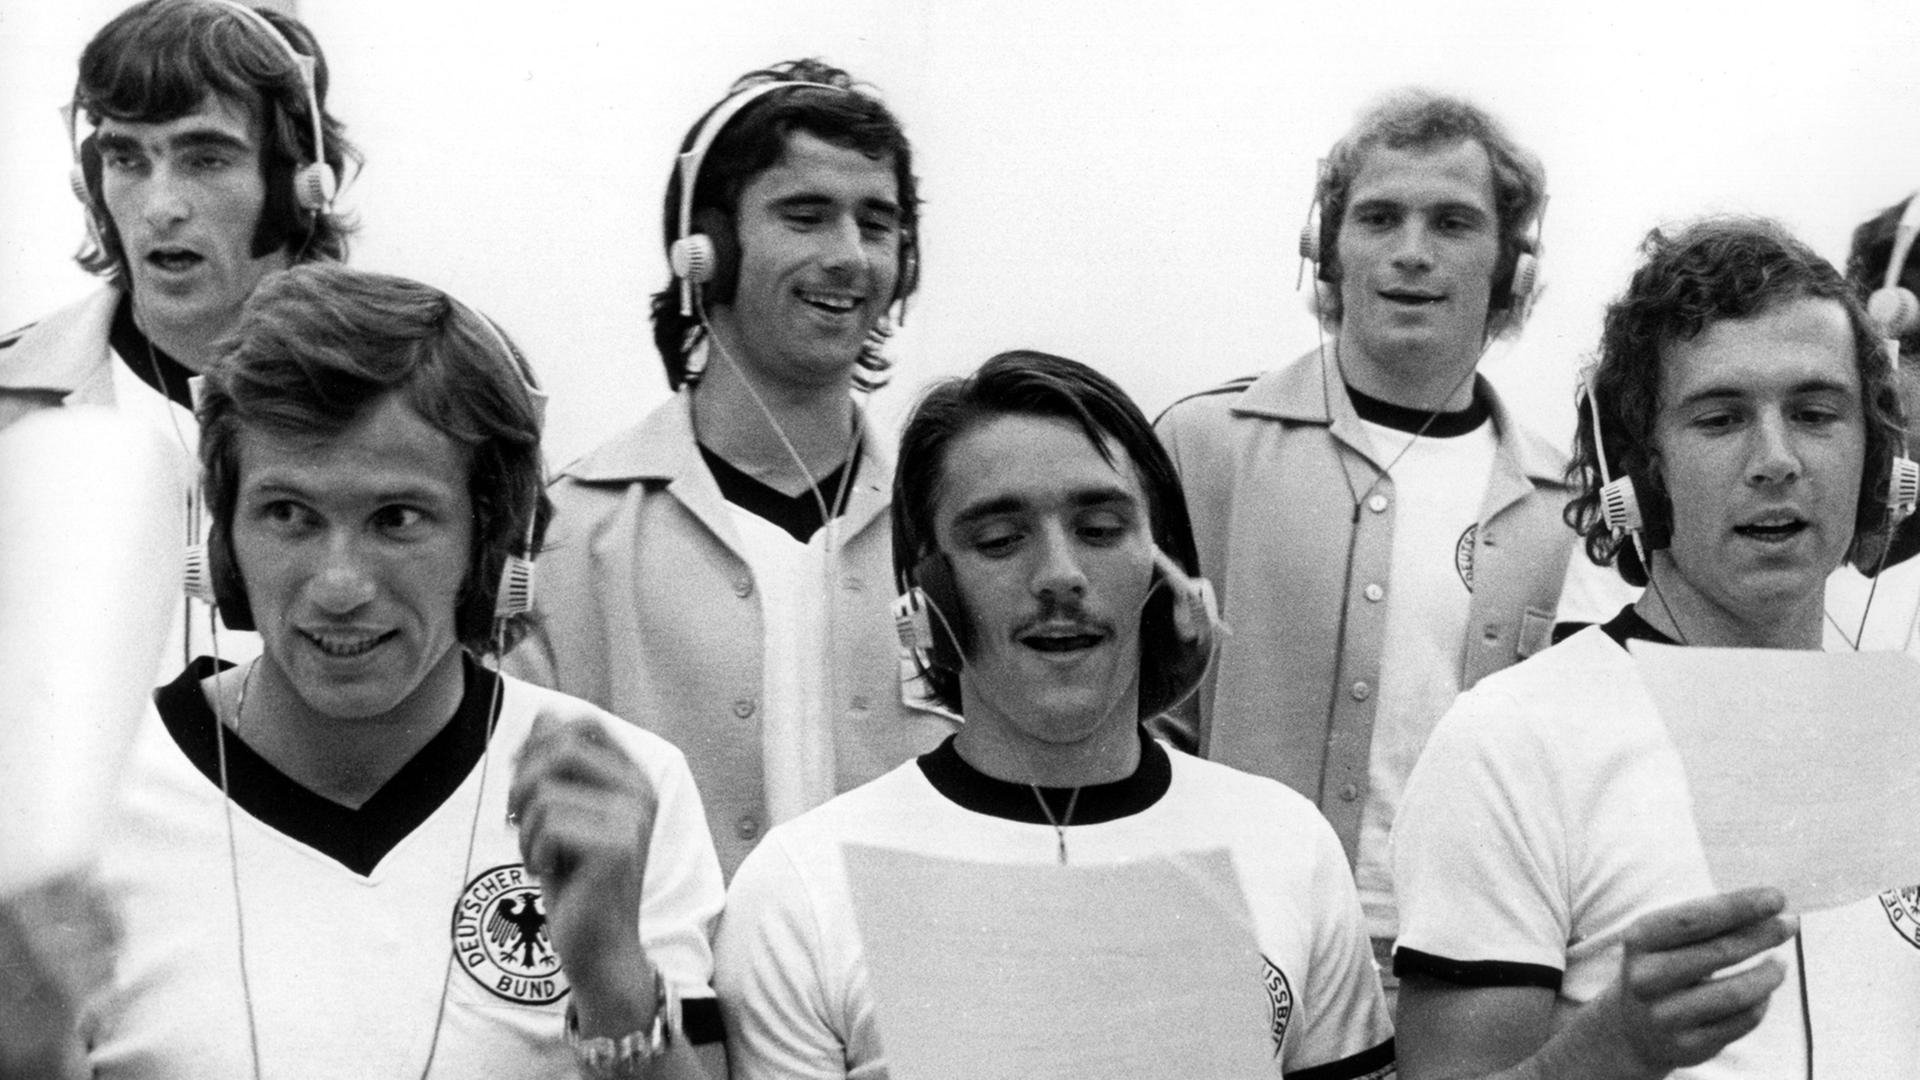 Im Tonstudio 1973: Hintere Reihe (v.l.): Bernd Franke, Gerd Müller, Uli Hoeneß; Vordere Reihe (v.l.): Jupp Heynckes, Josef Kapellmann, Franz Beckenbauer